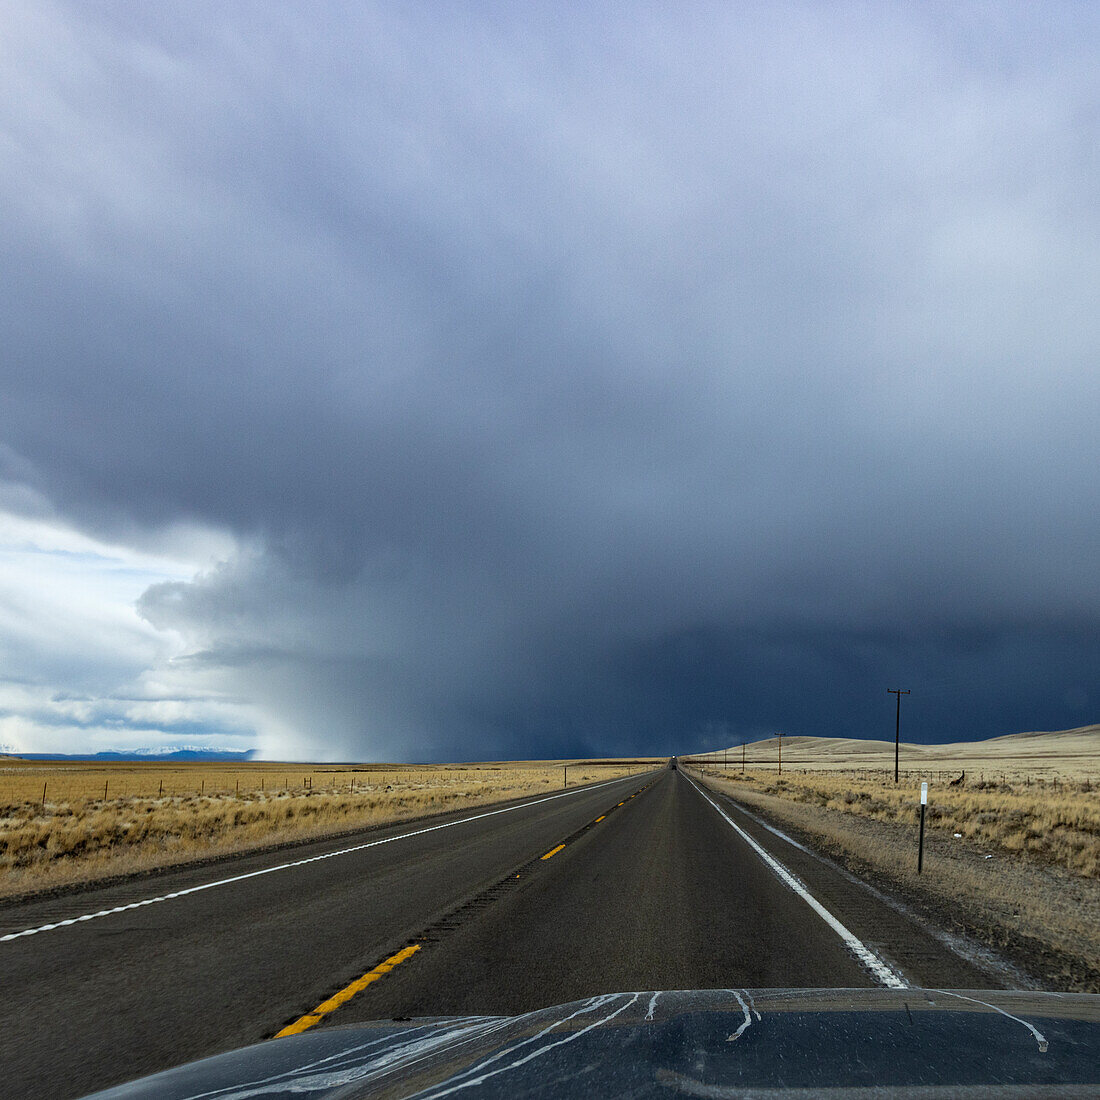 USA, Nevada, McDermitt, Highway leading towards storm clouds on horizon